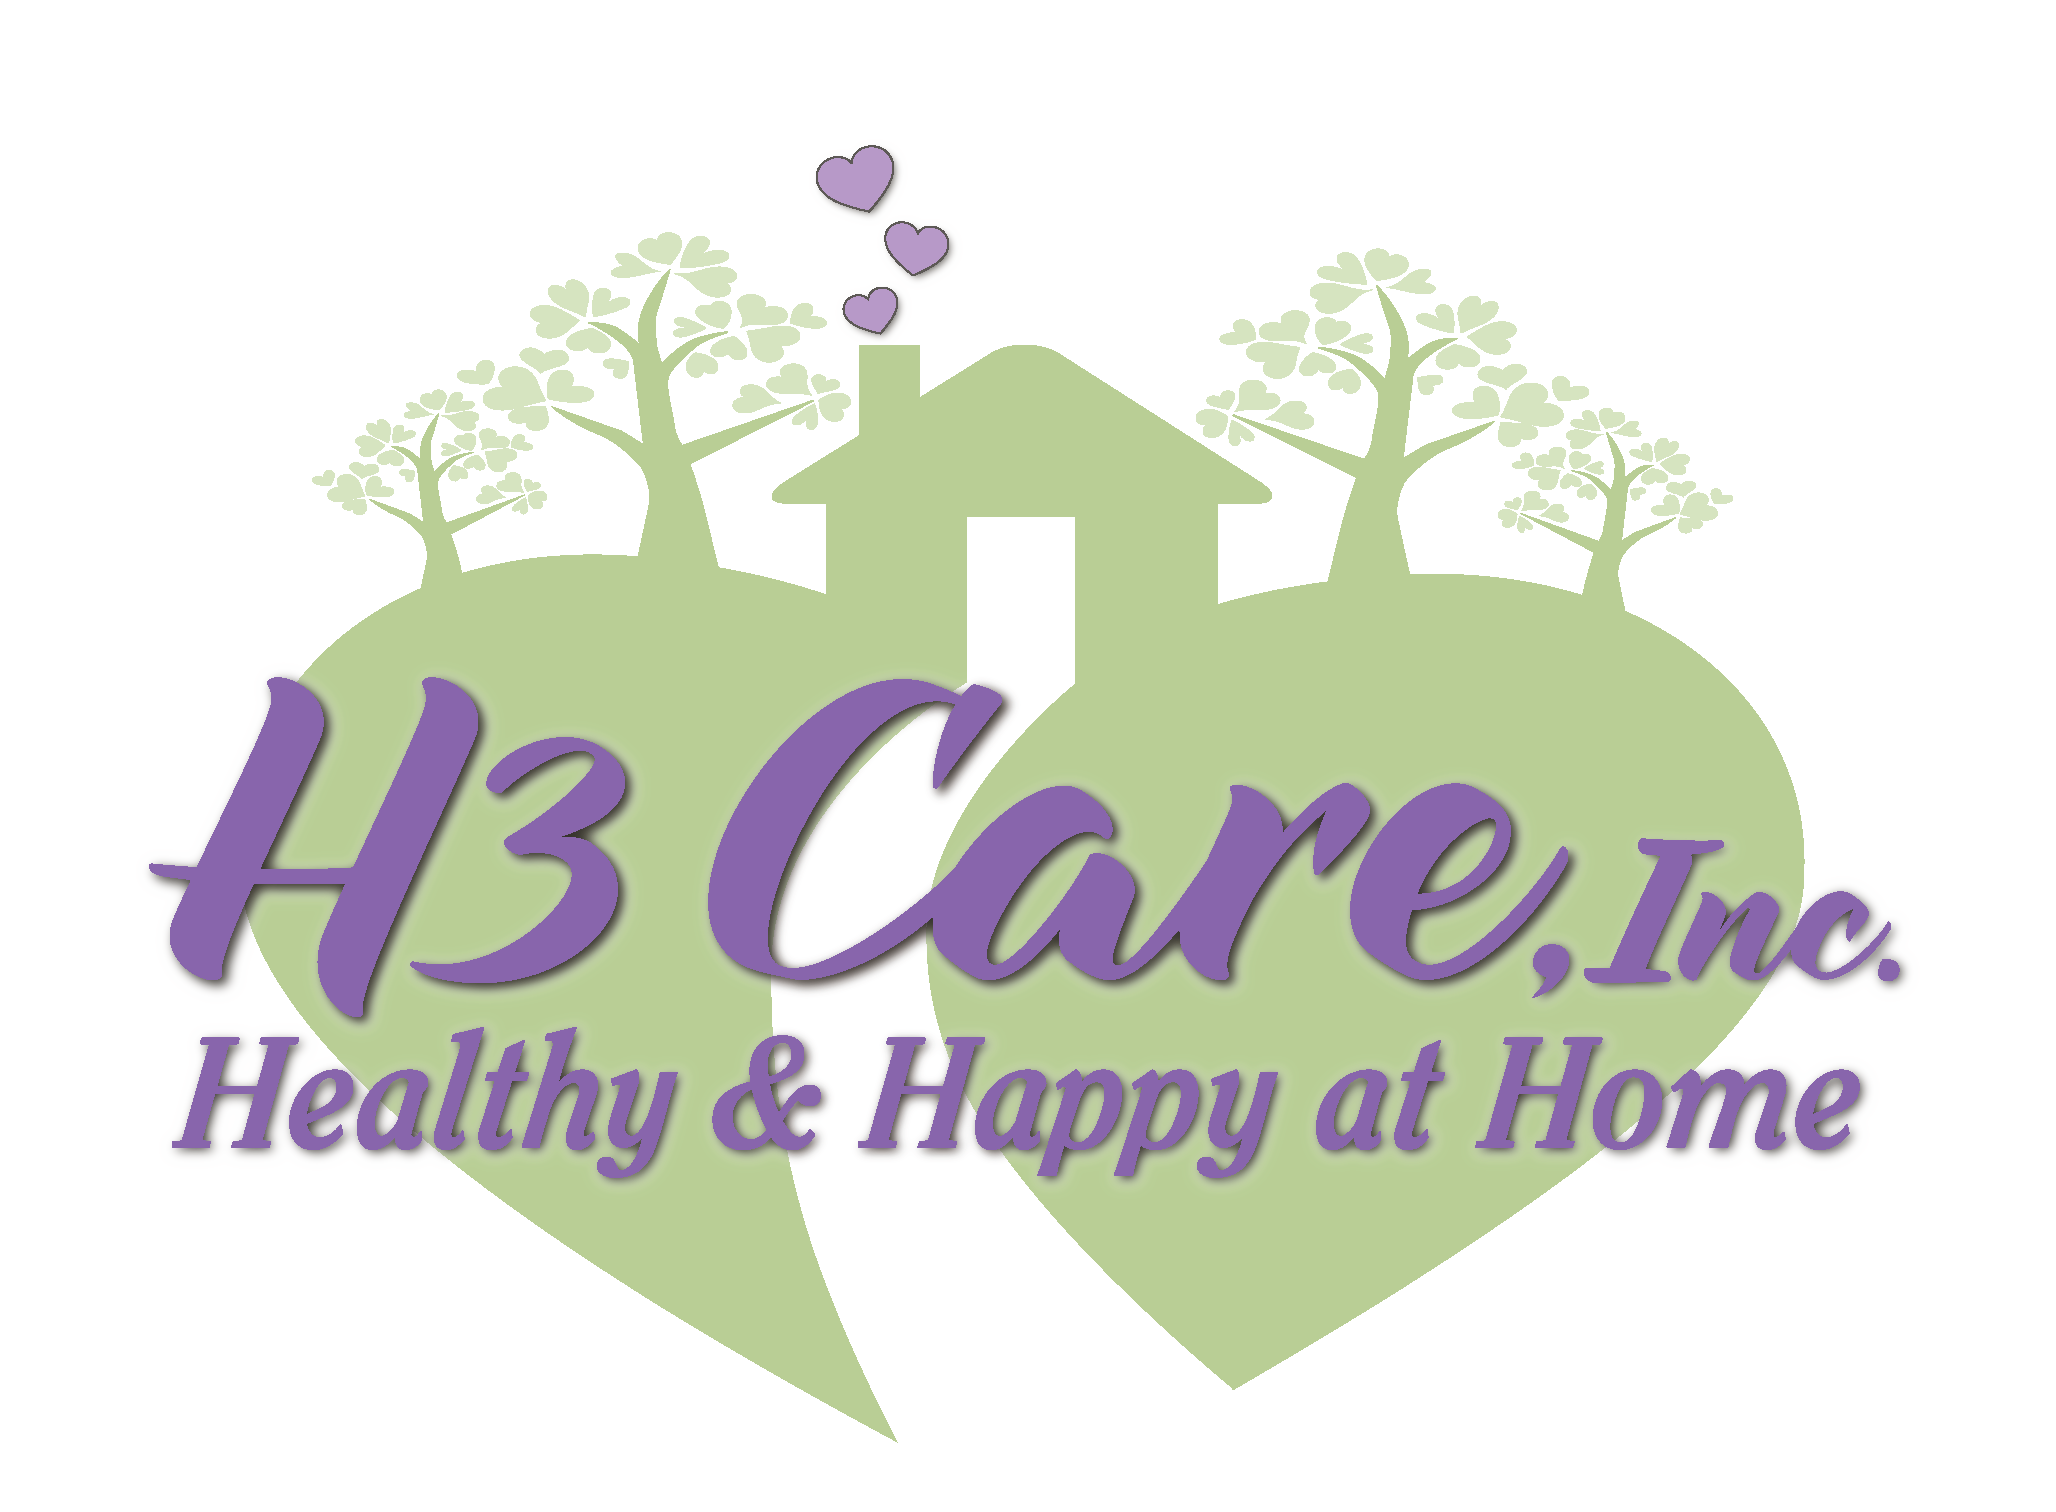 H3 Care, Inc